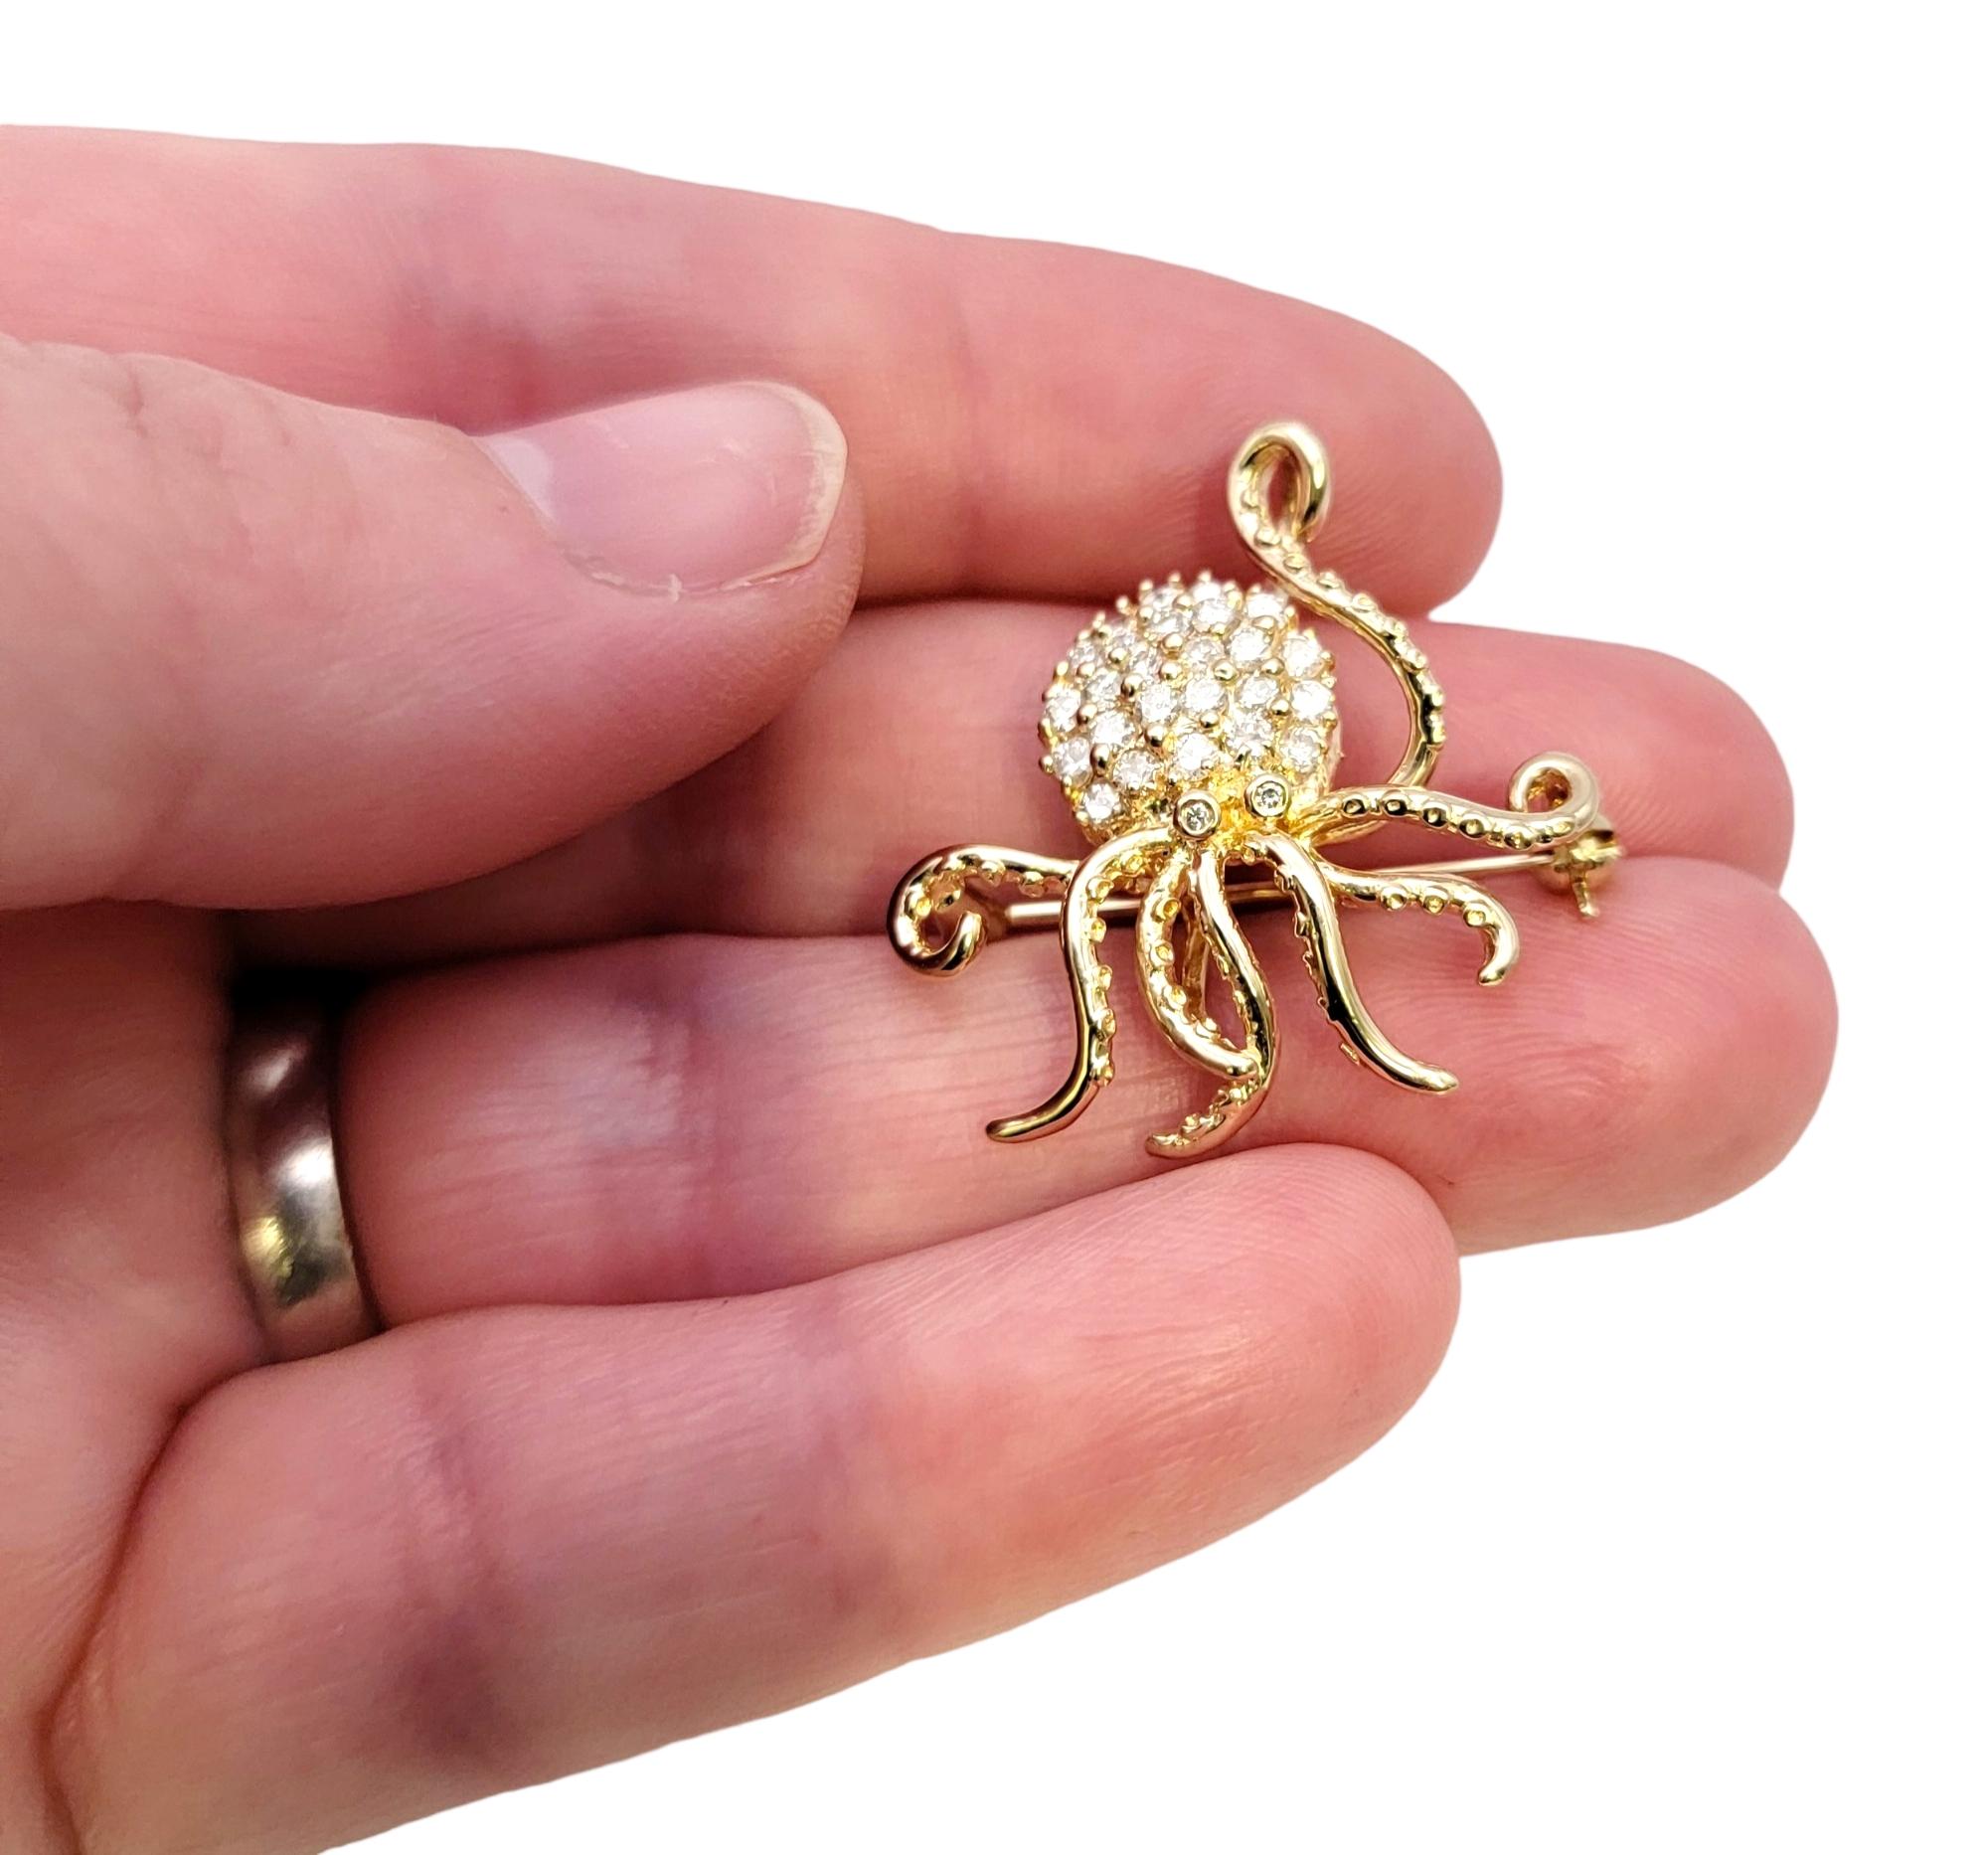 Delightful 14 Karat Polished Yellow Gold Octopus Brooch / Pendant with Diamonds 4